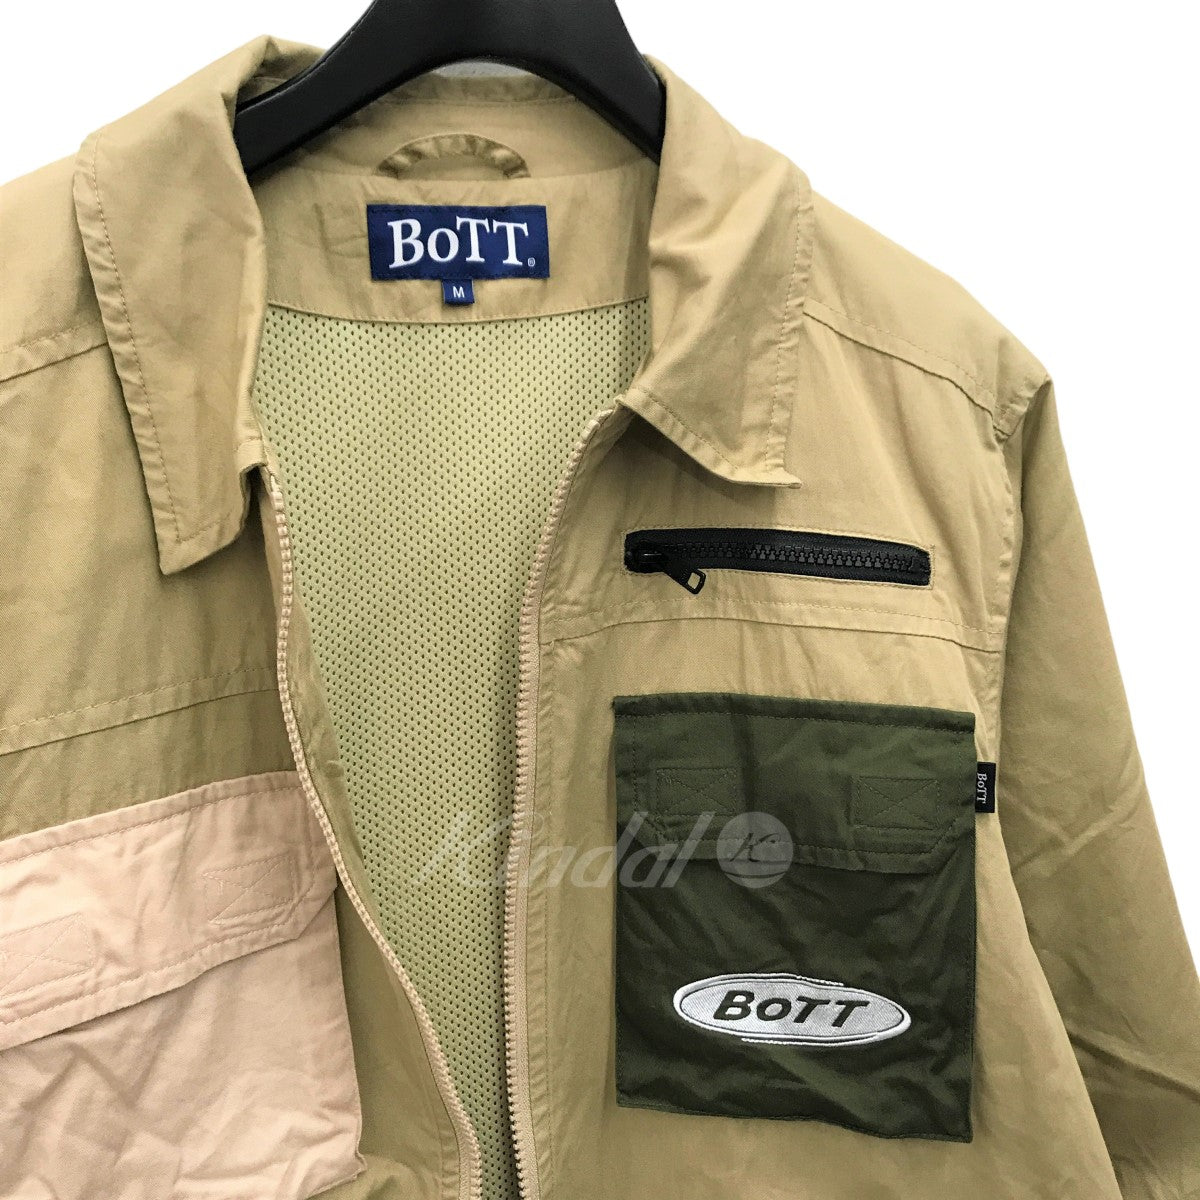 BoTT(ボット) 22AW Multi Pocket Jacket マルチポケットジャケット 